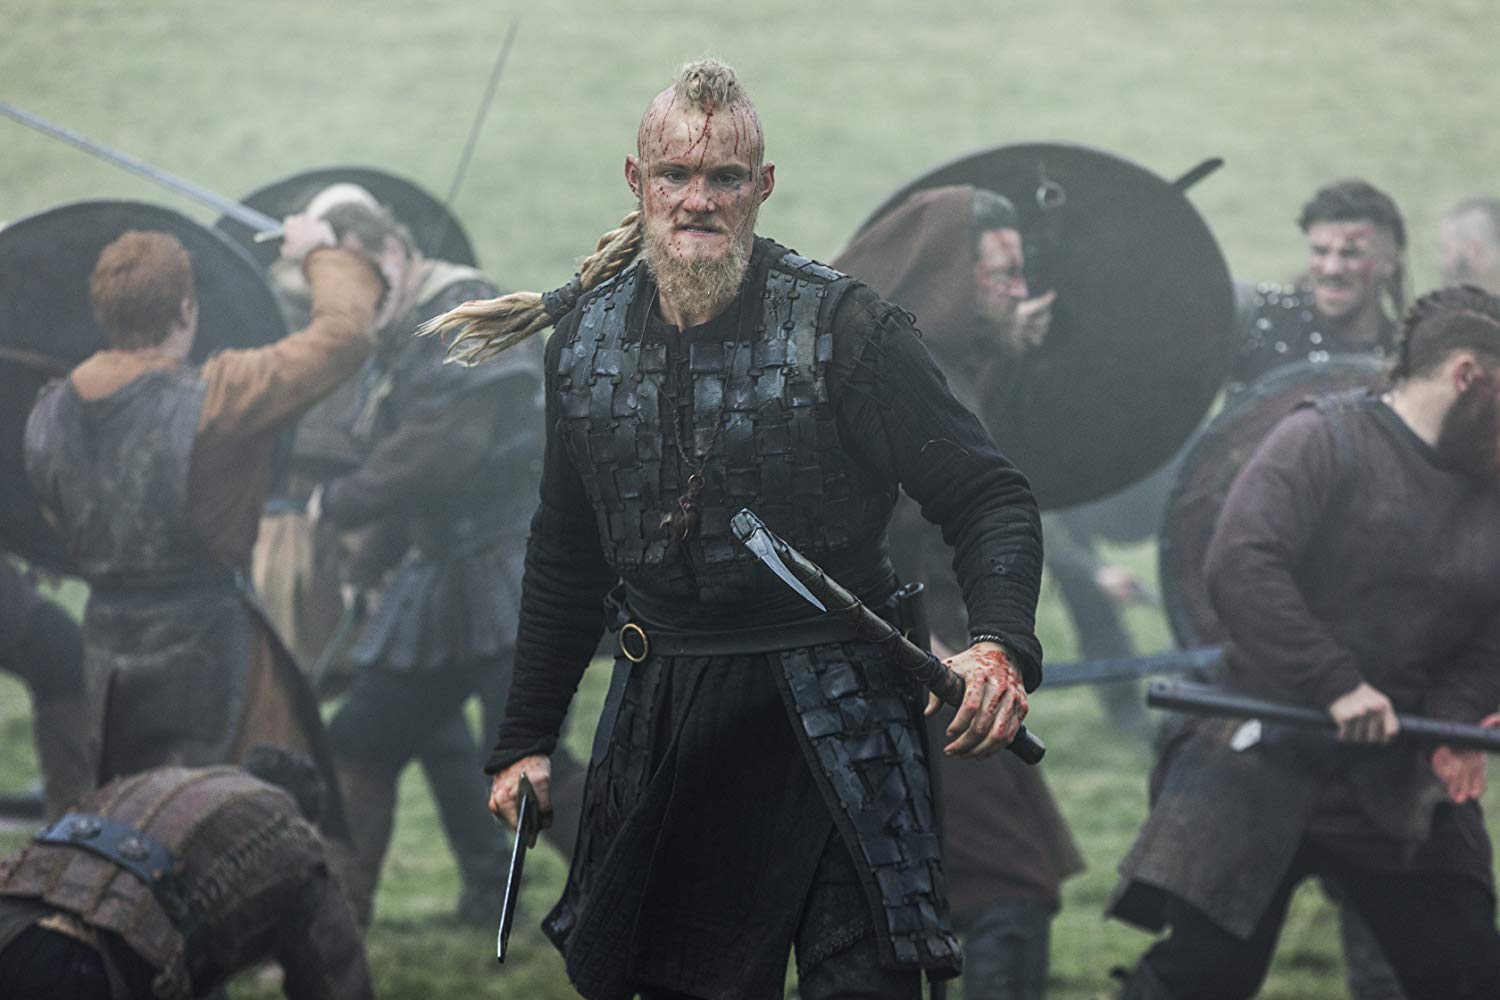 More Vikings appreciation - here's Alexander Ludwig (aka Bjorn).